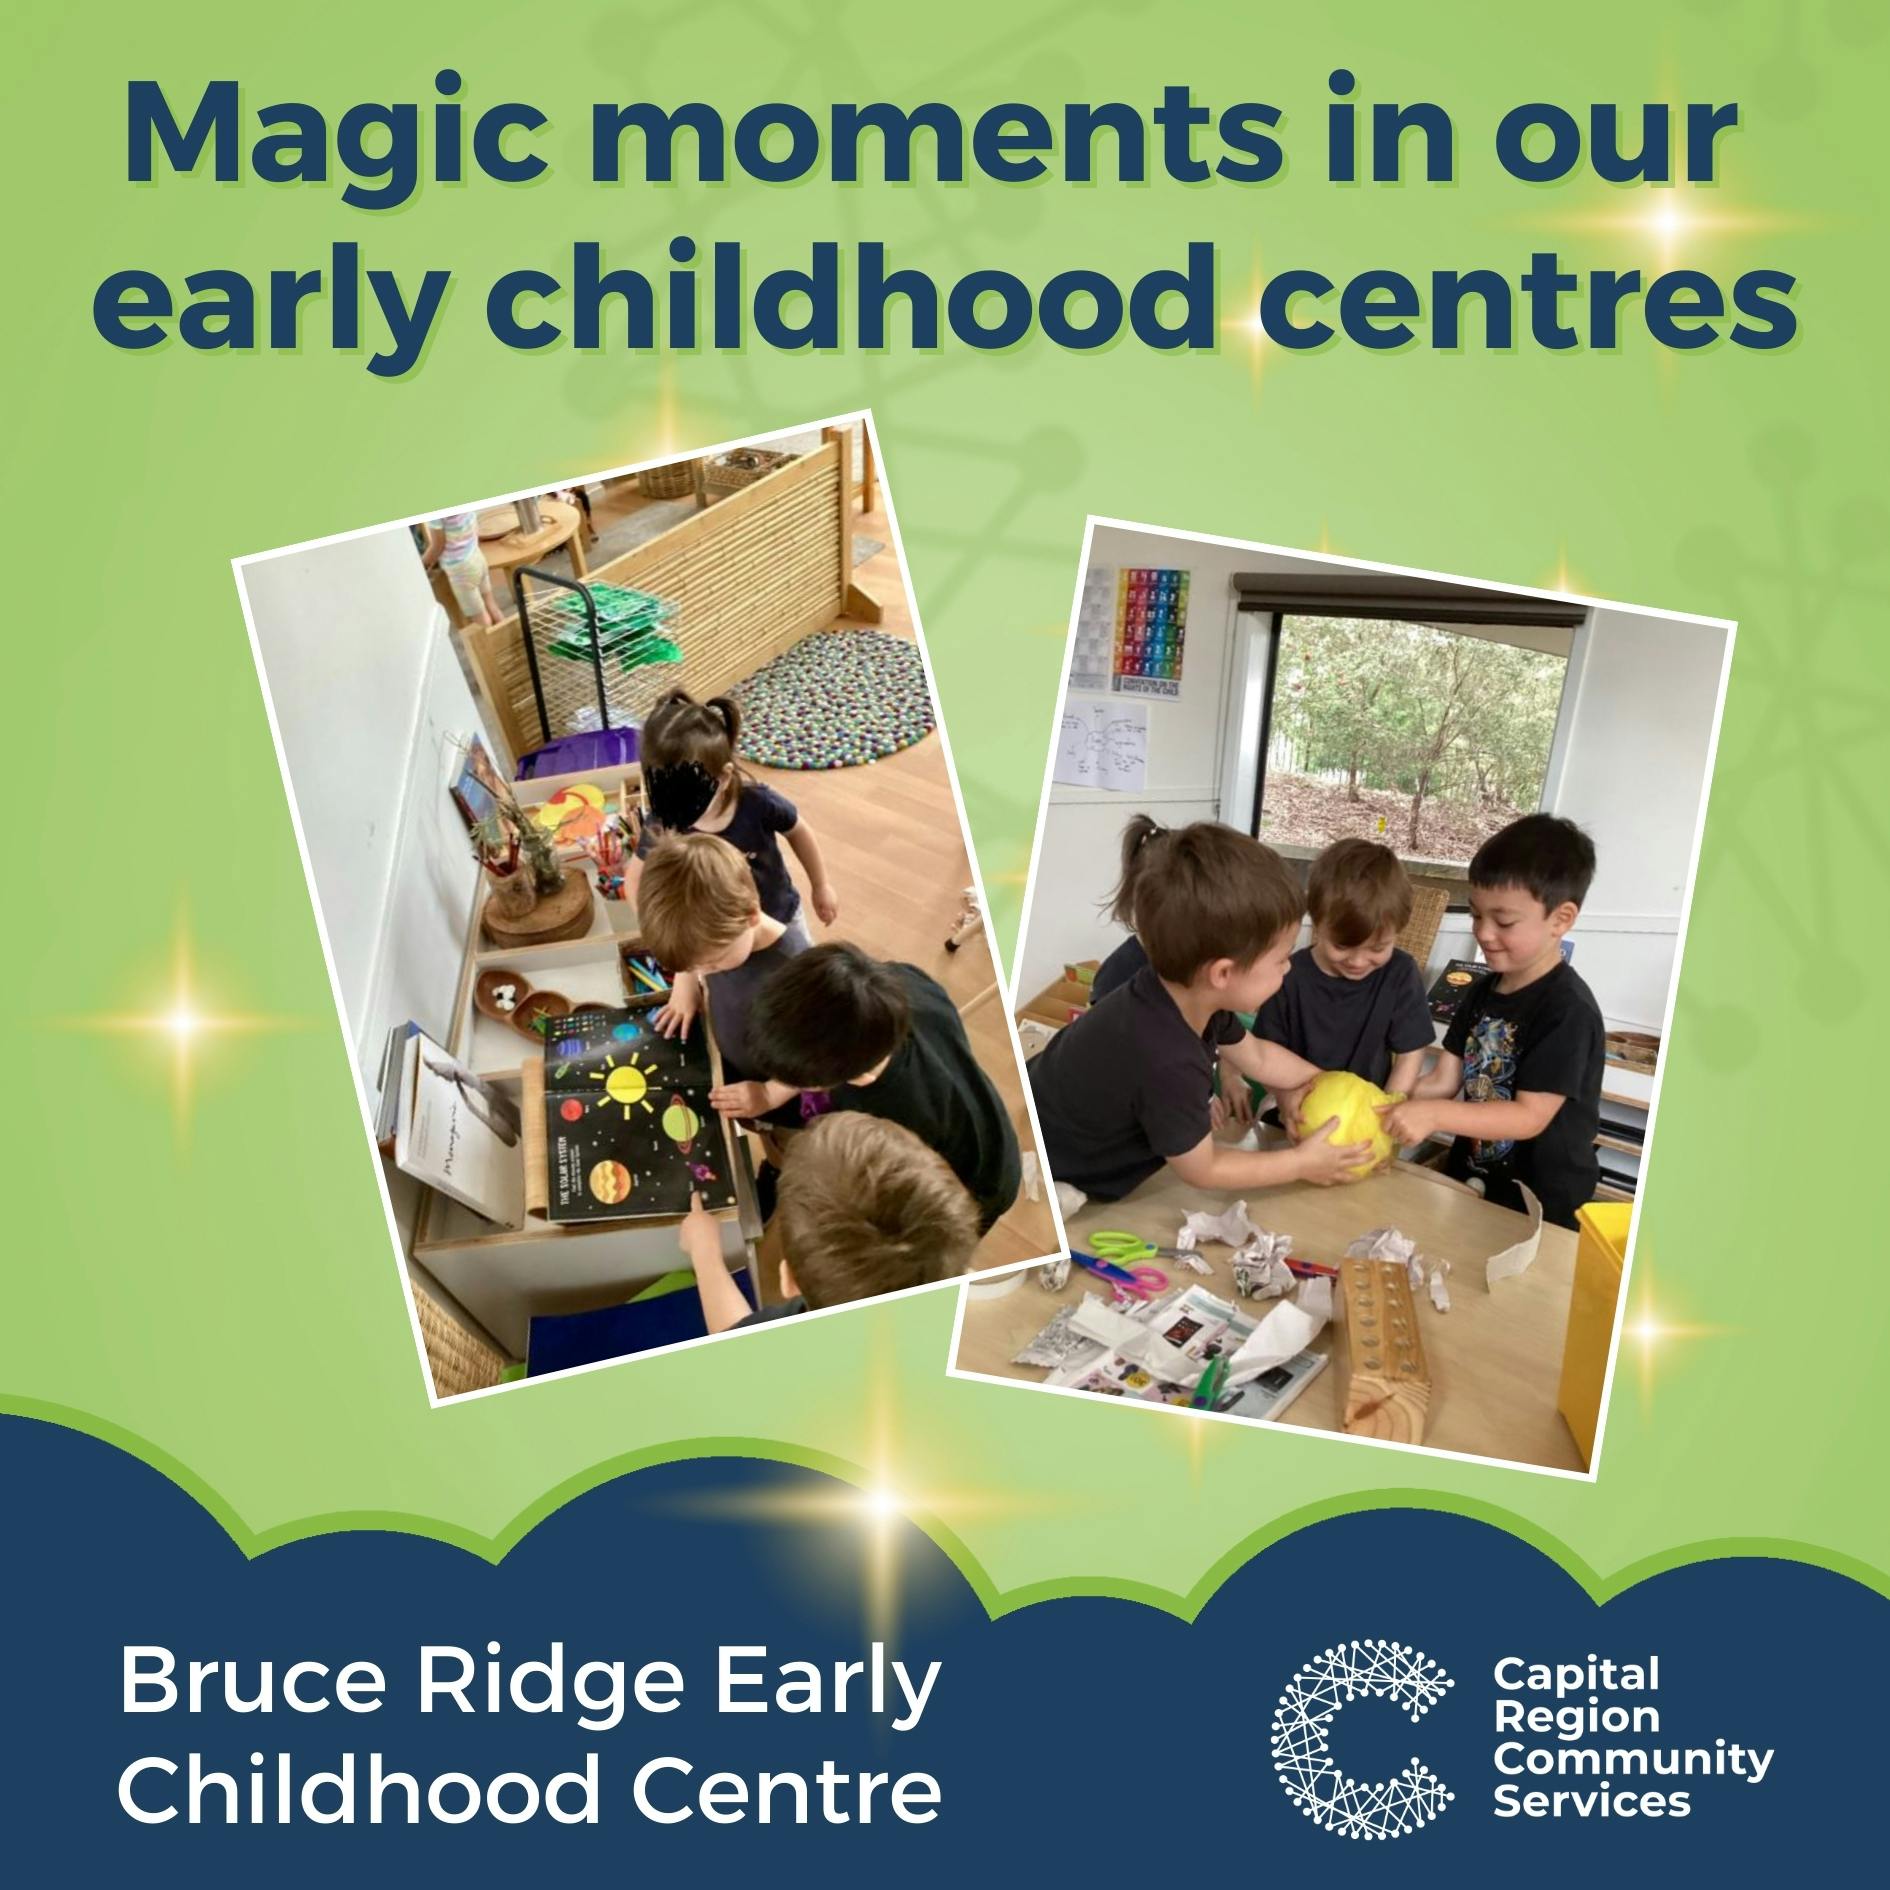 Magic moment: Bruce Ridge Early Childhood Centre